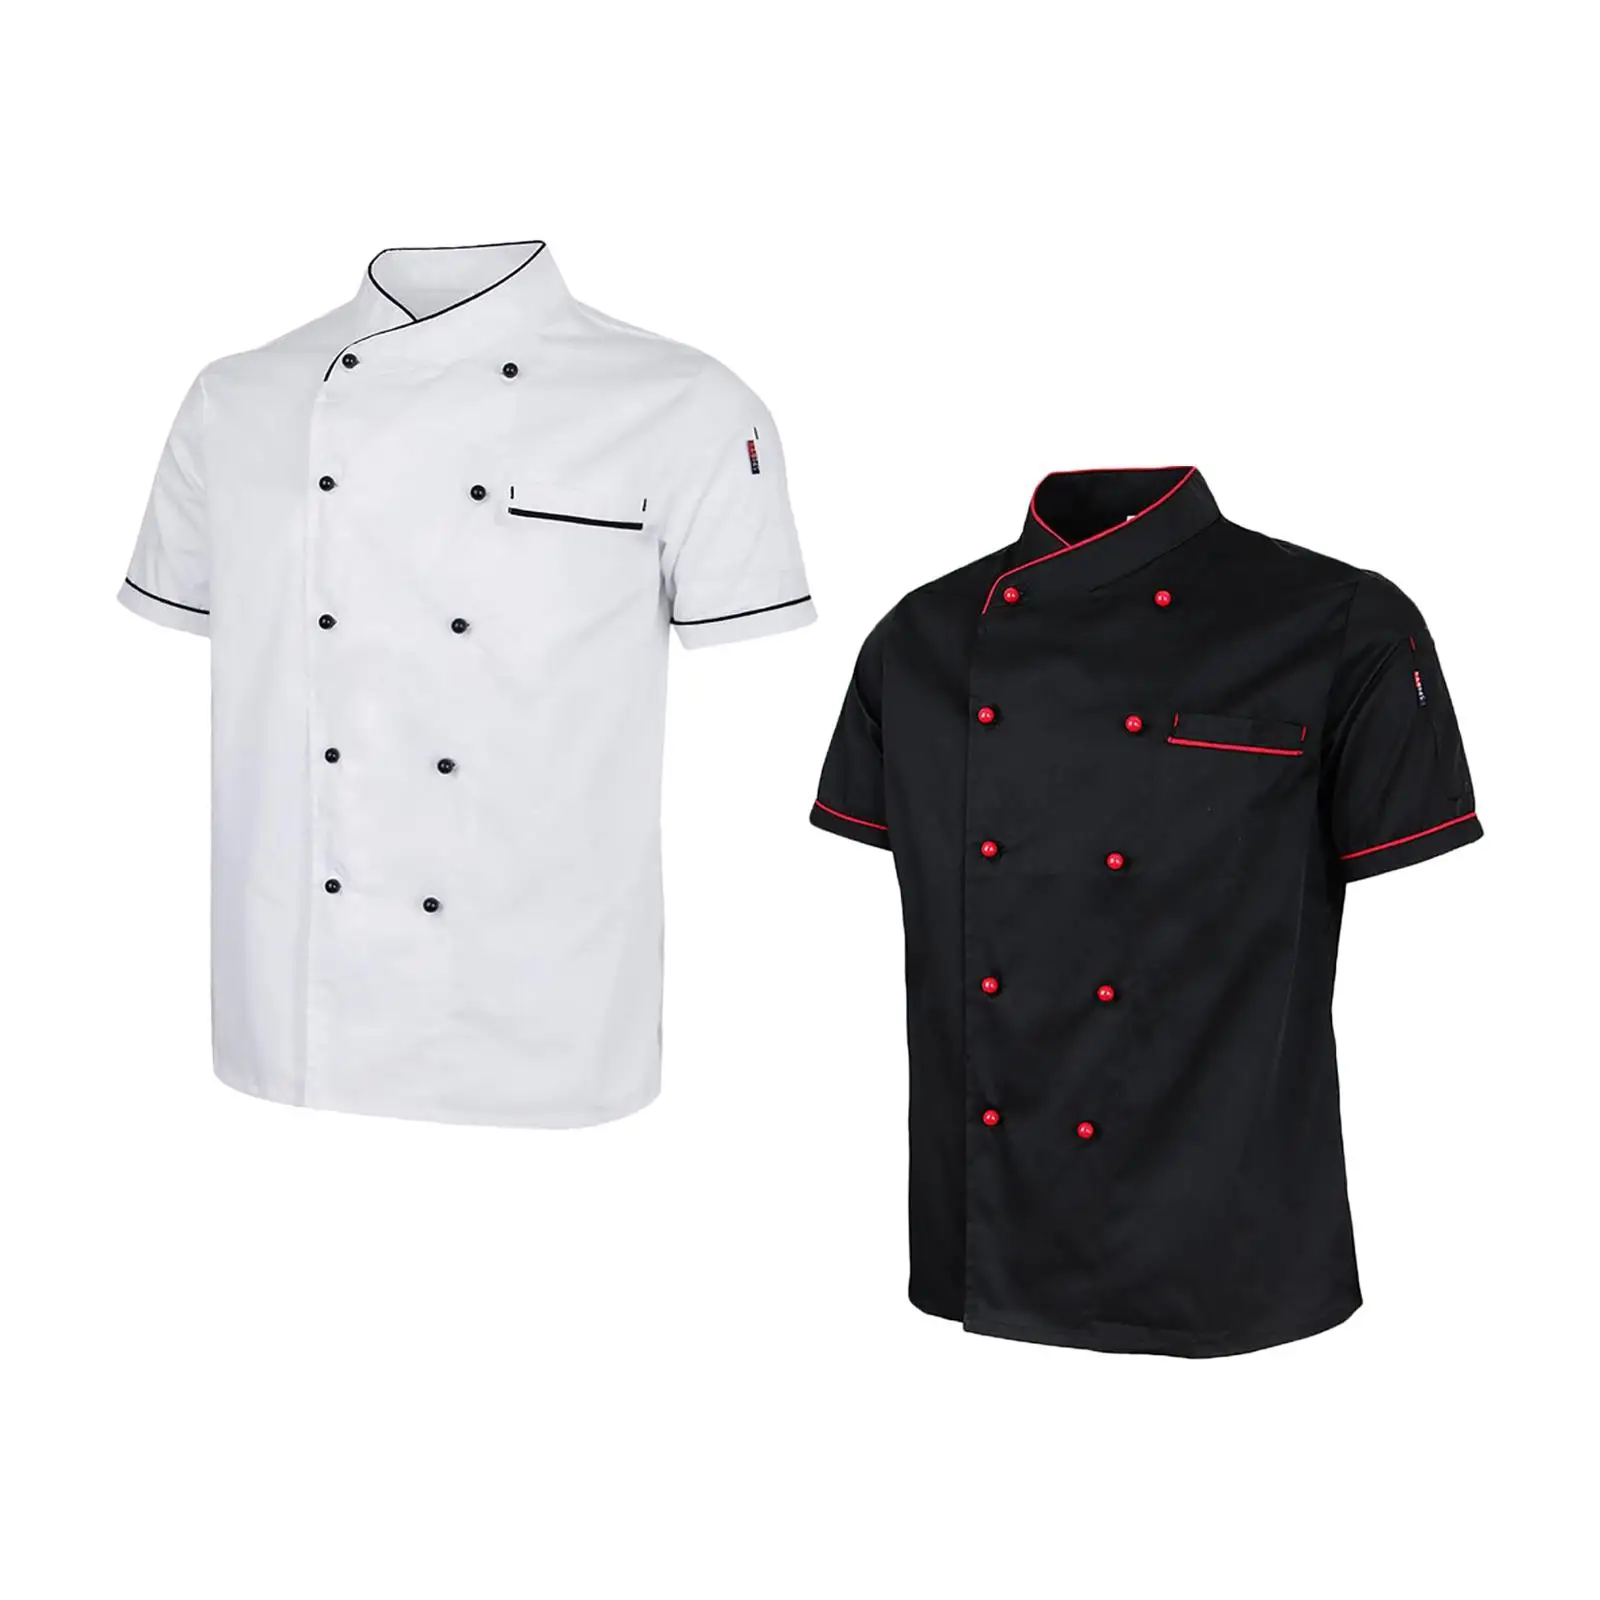 Unisex Chef Jacket Food Service Short Sleeve Top Executive Uniform for Hotel